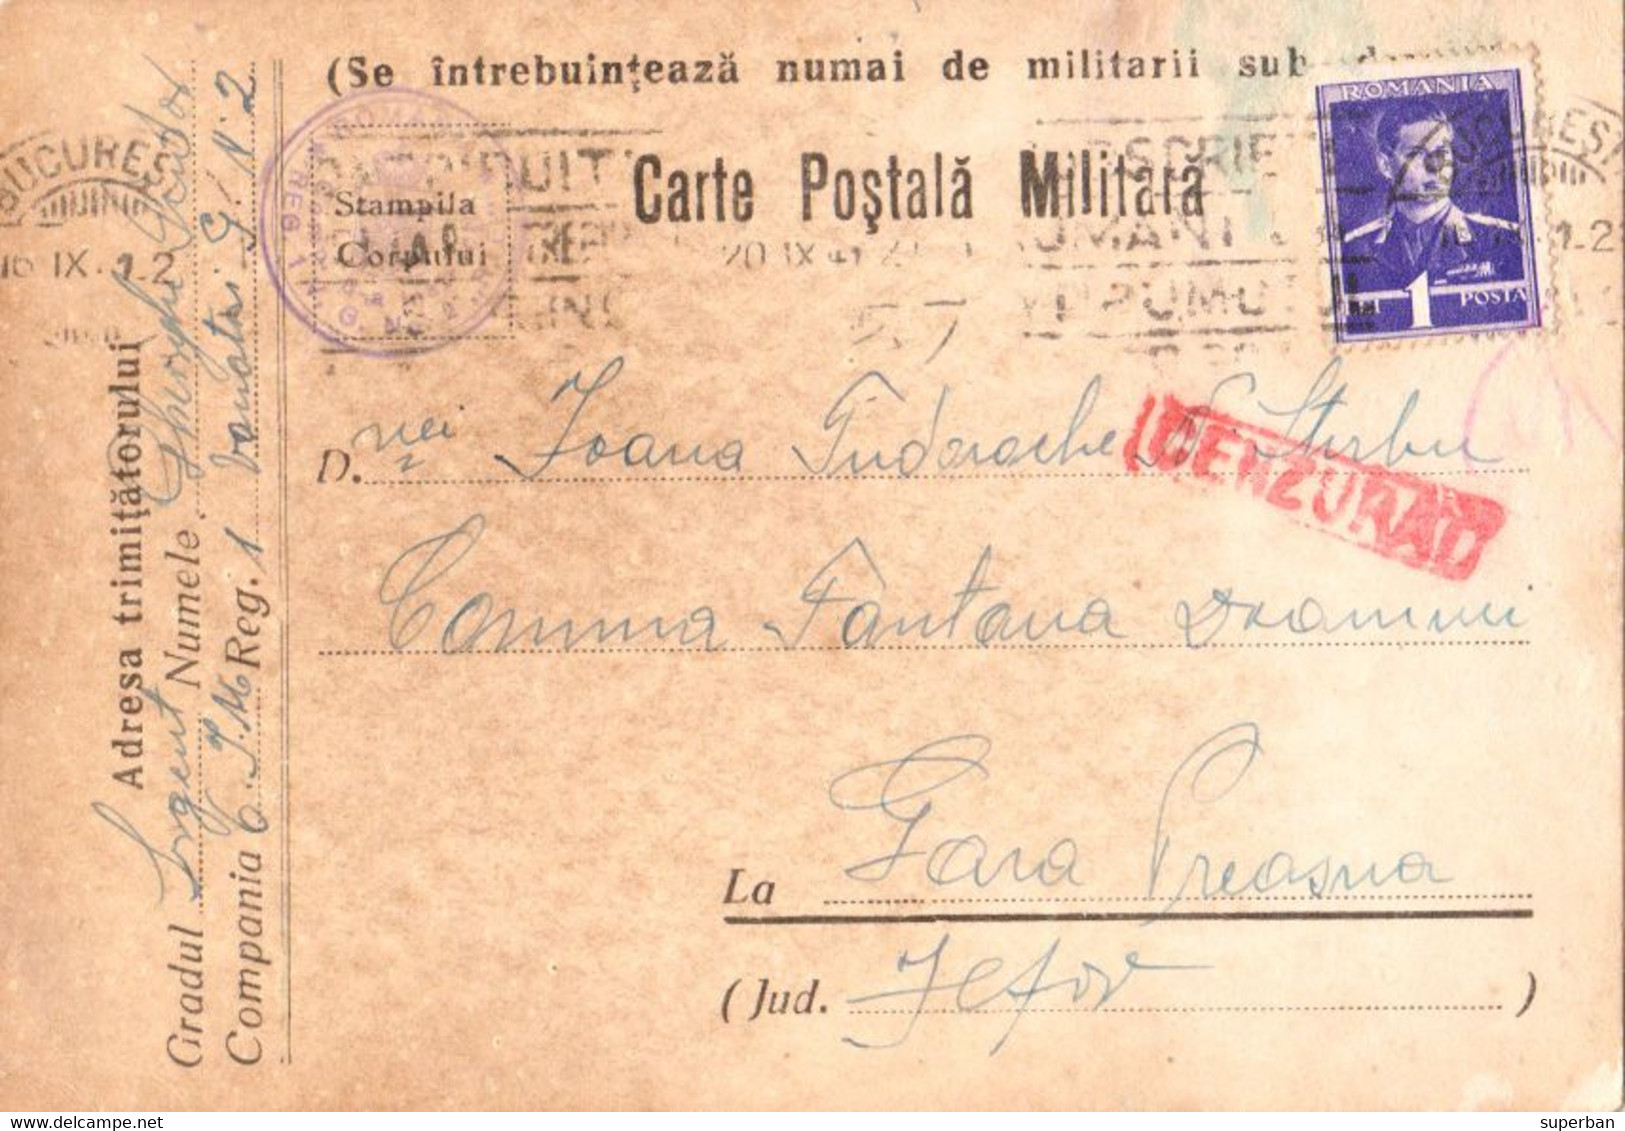 ROMANIA - WW II : MILITARY POSTCARD MAILED In SEPTEMBER 1941 From THE BATTLEFIELD By ROMANIAN MILITARY POST (ak646) - 2de Wereldoorlog (Brieven)